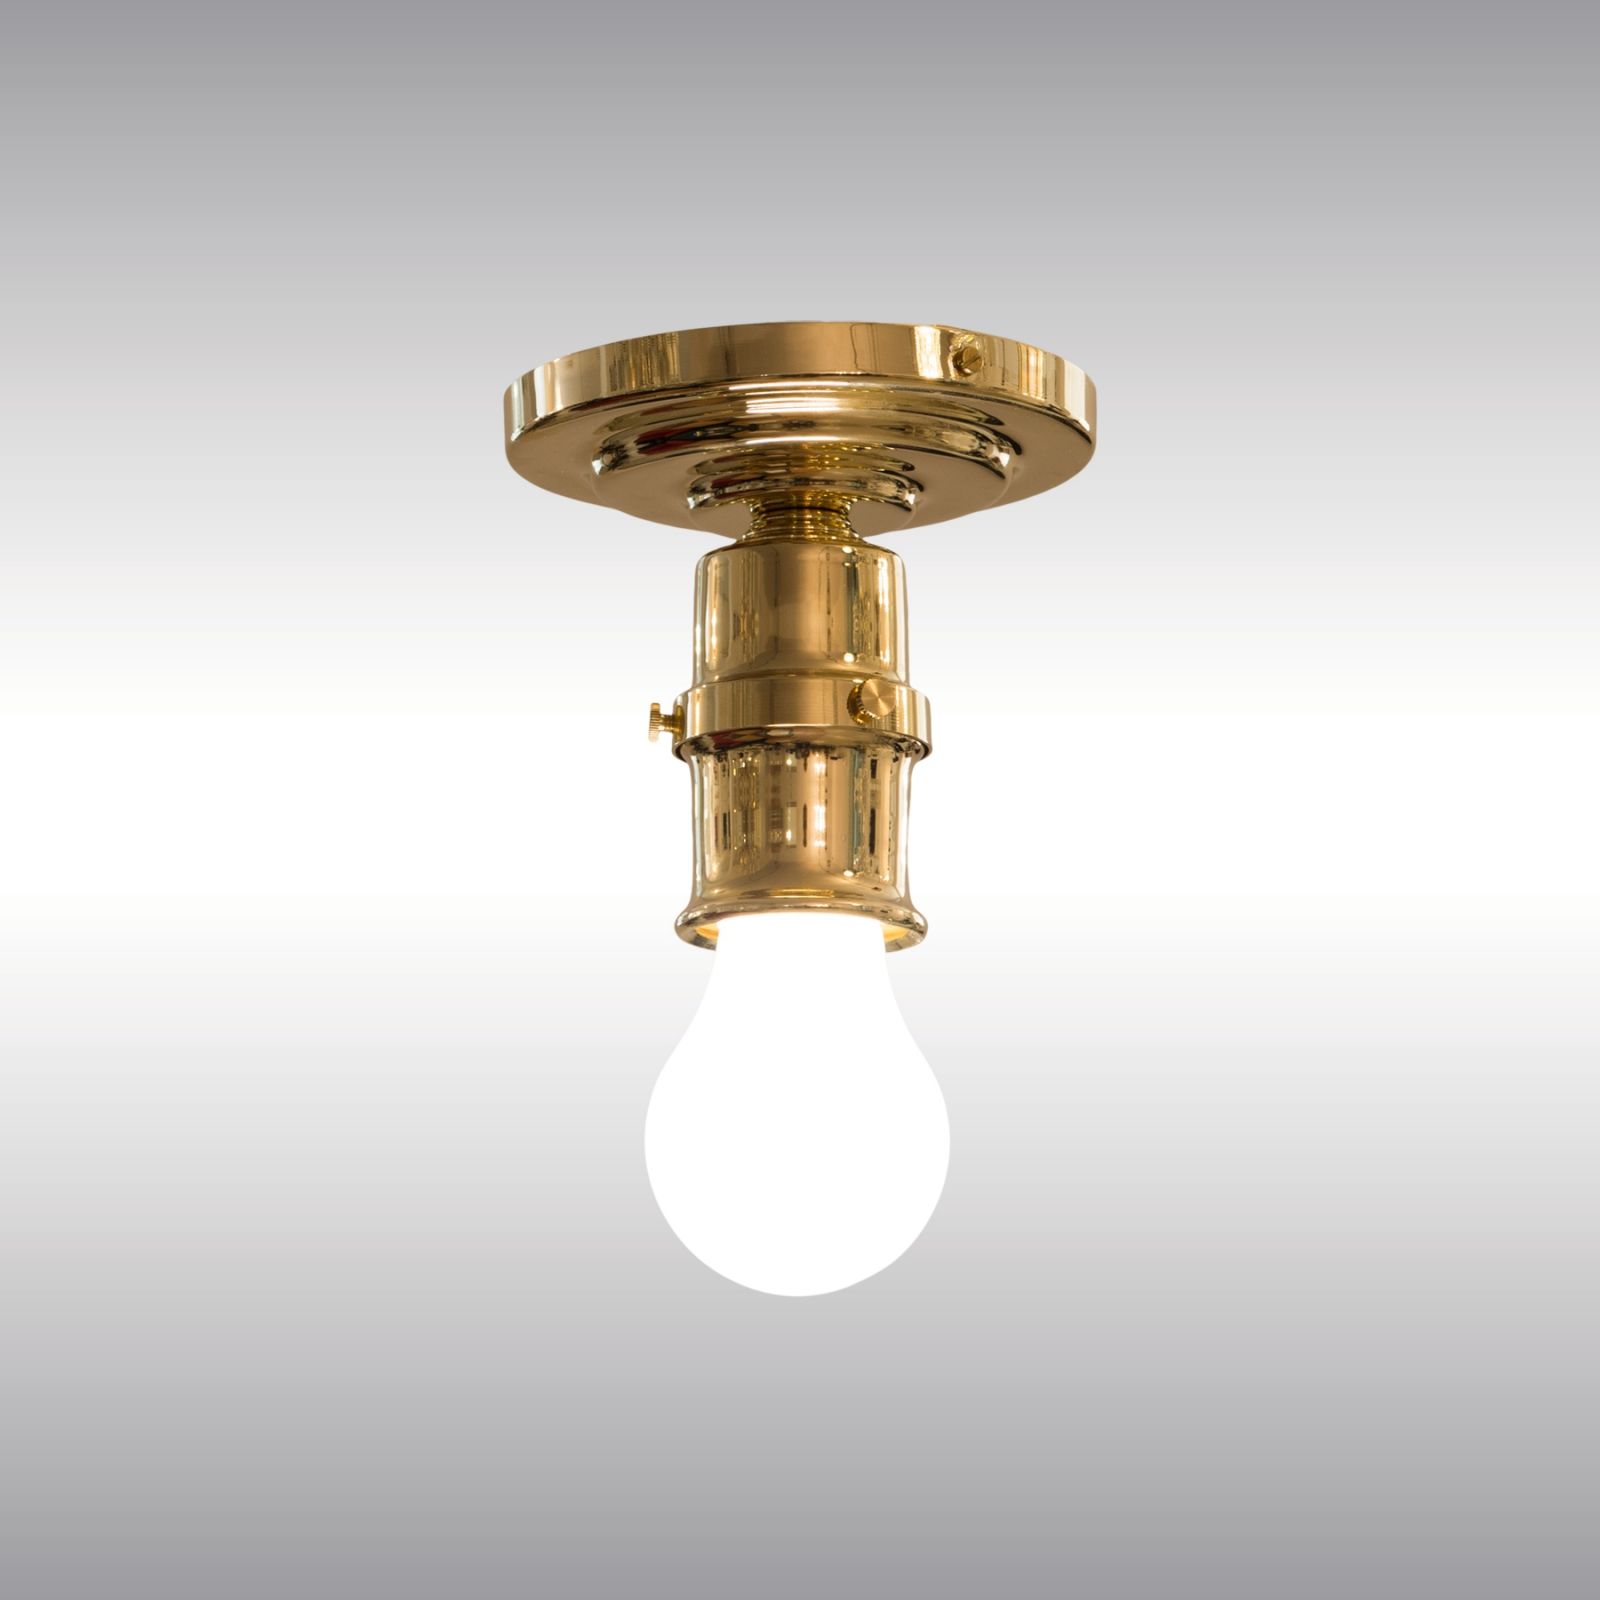 WOKA LAMPS VIENNA - OrderNr.: 22015|Otto Wagner Postal Saving Flush Mount - Design: Otto Wagner